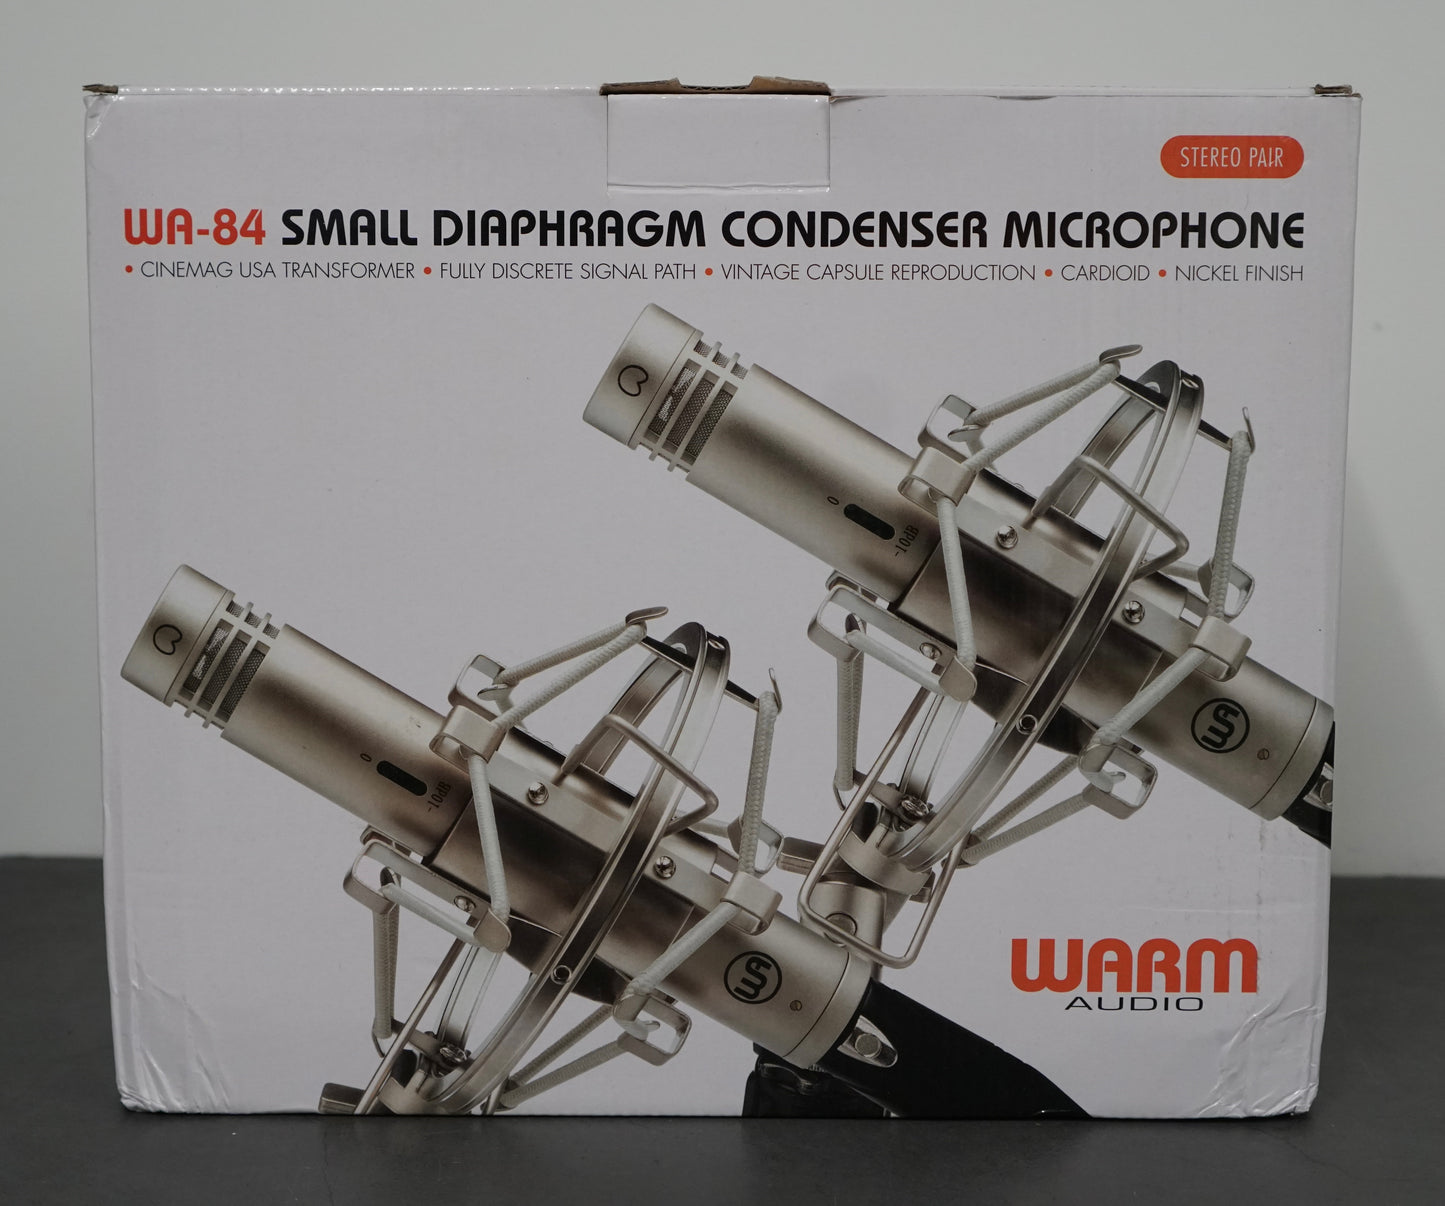 Warm Audio WA-84 (Stereo Pair)